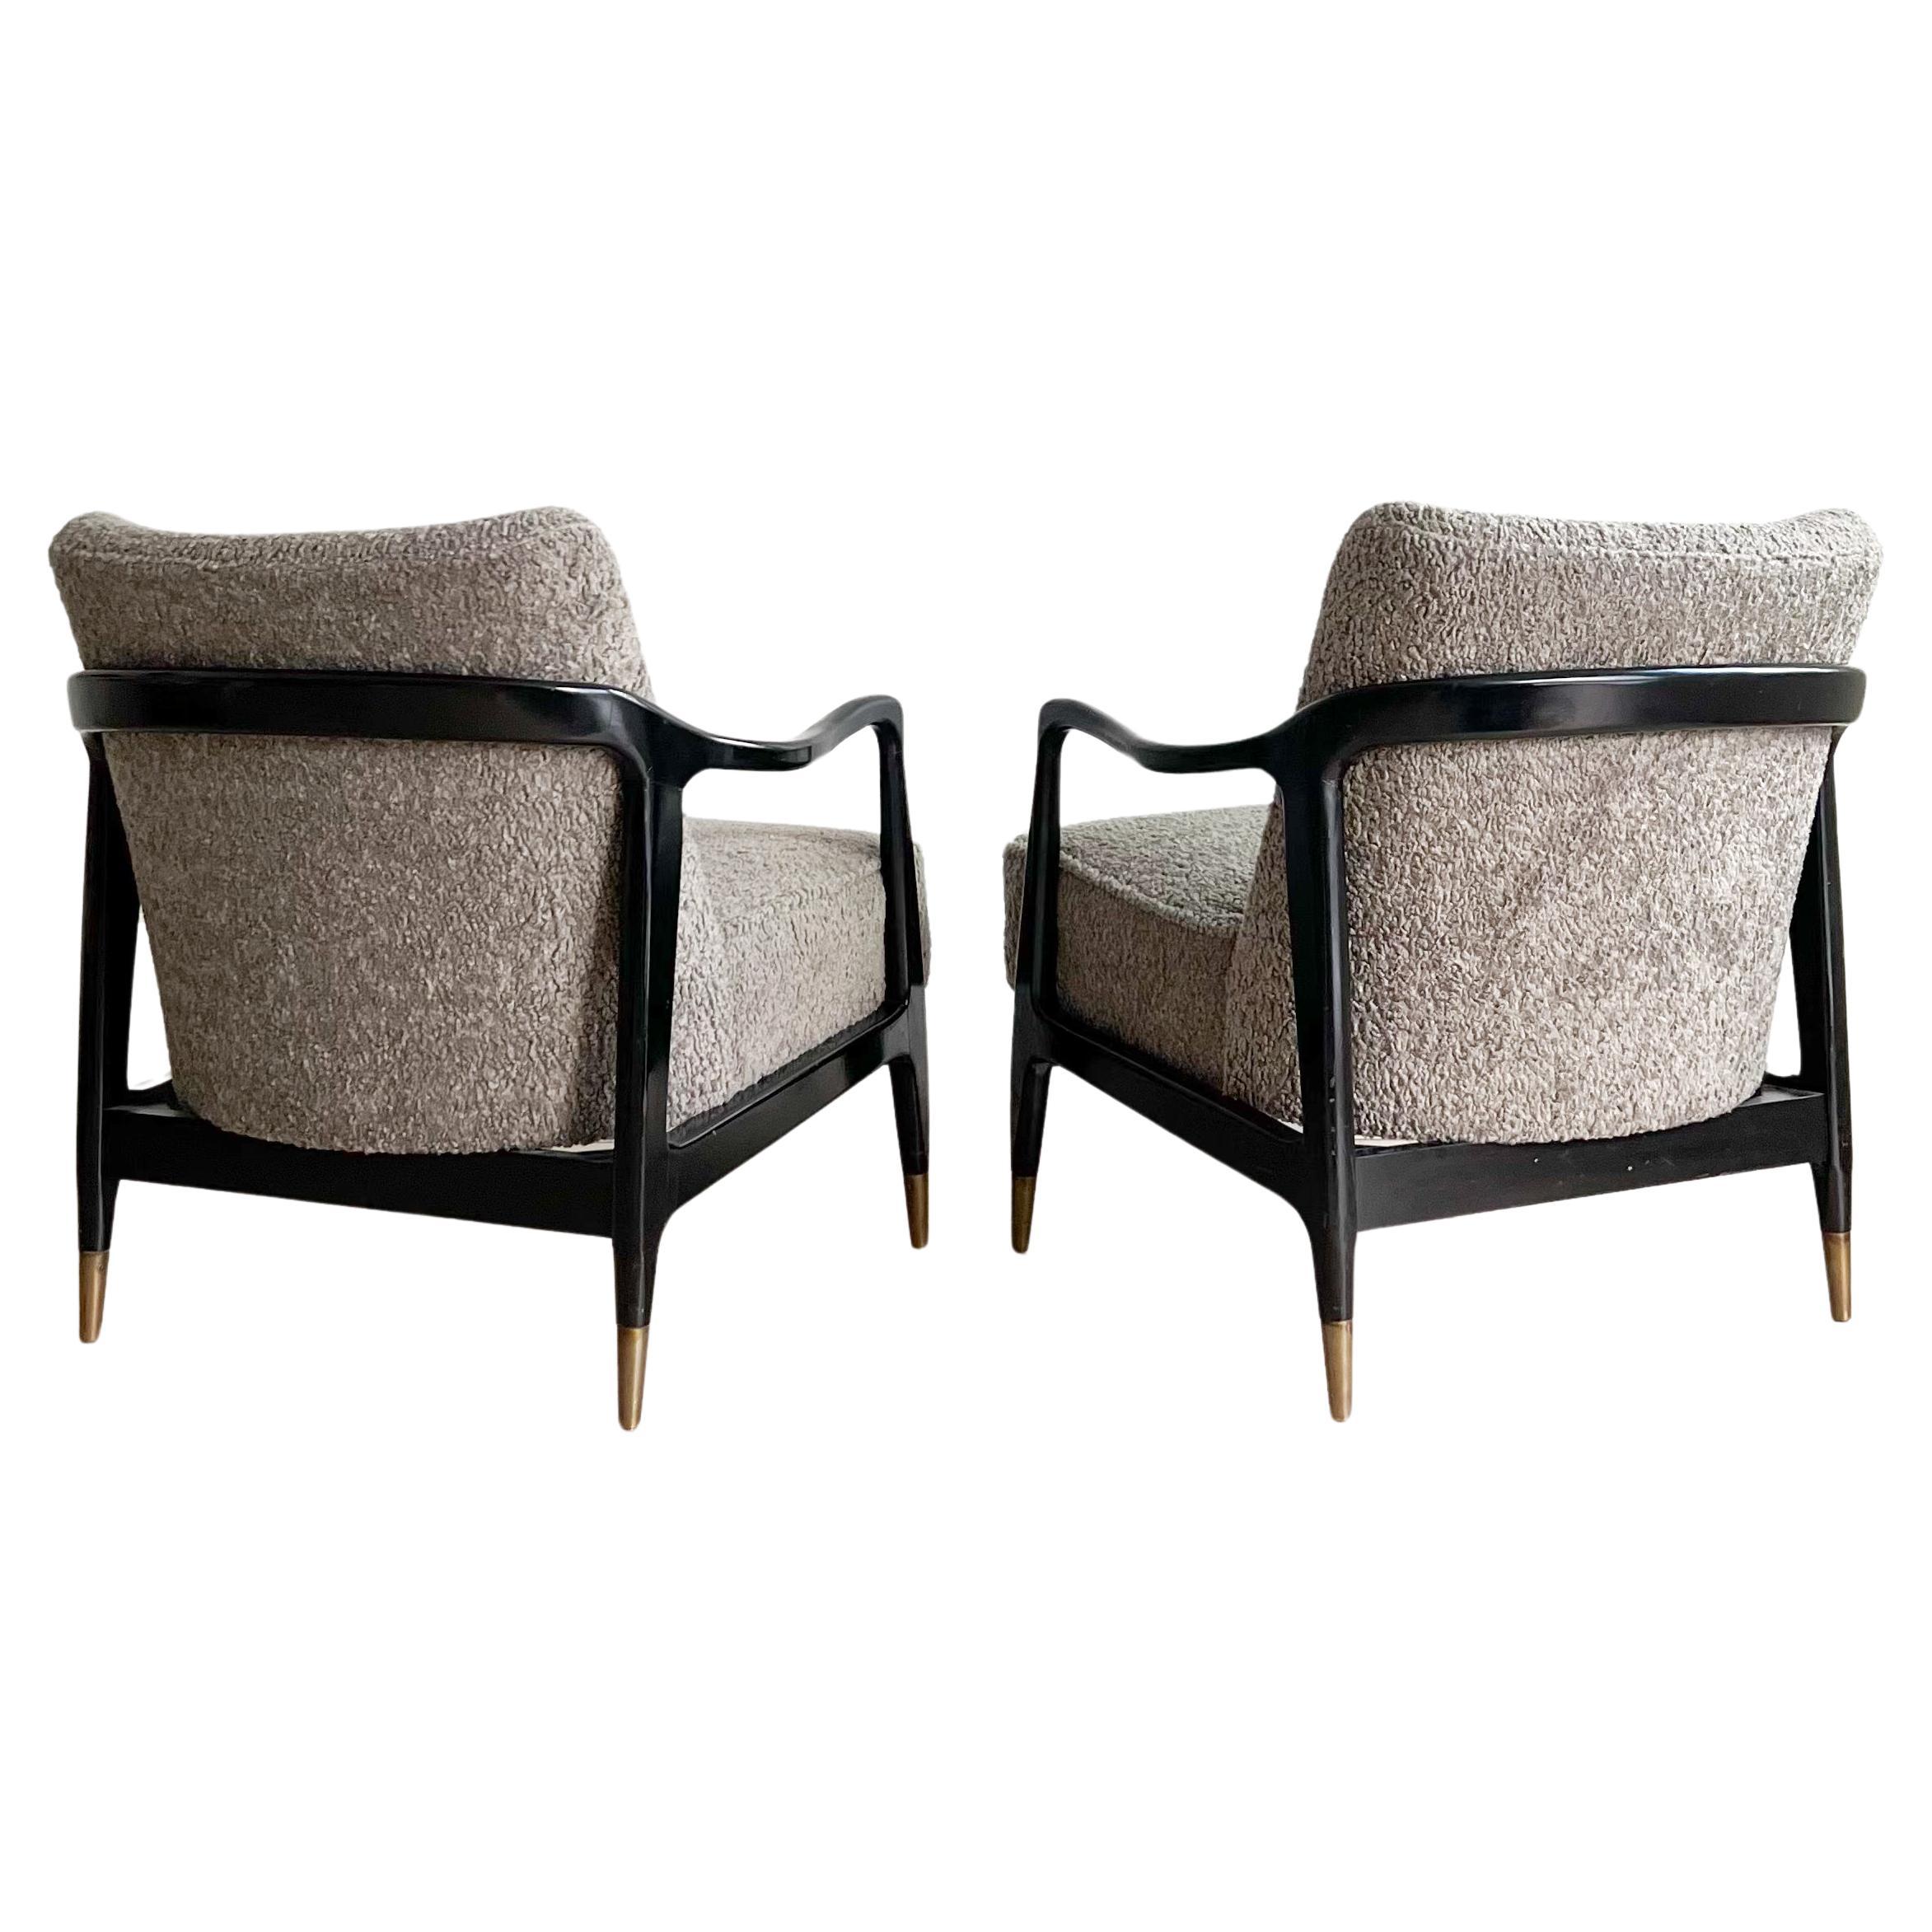 Pair of Mid-Century Modern Lounge Chairs - Gio Ponti Style